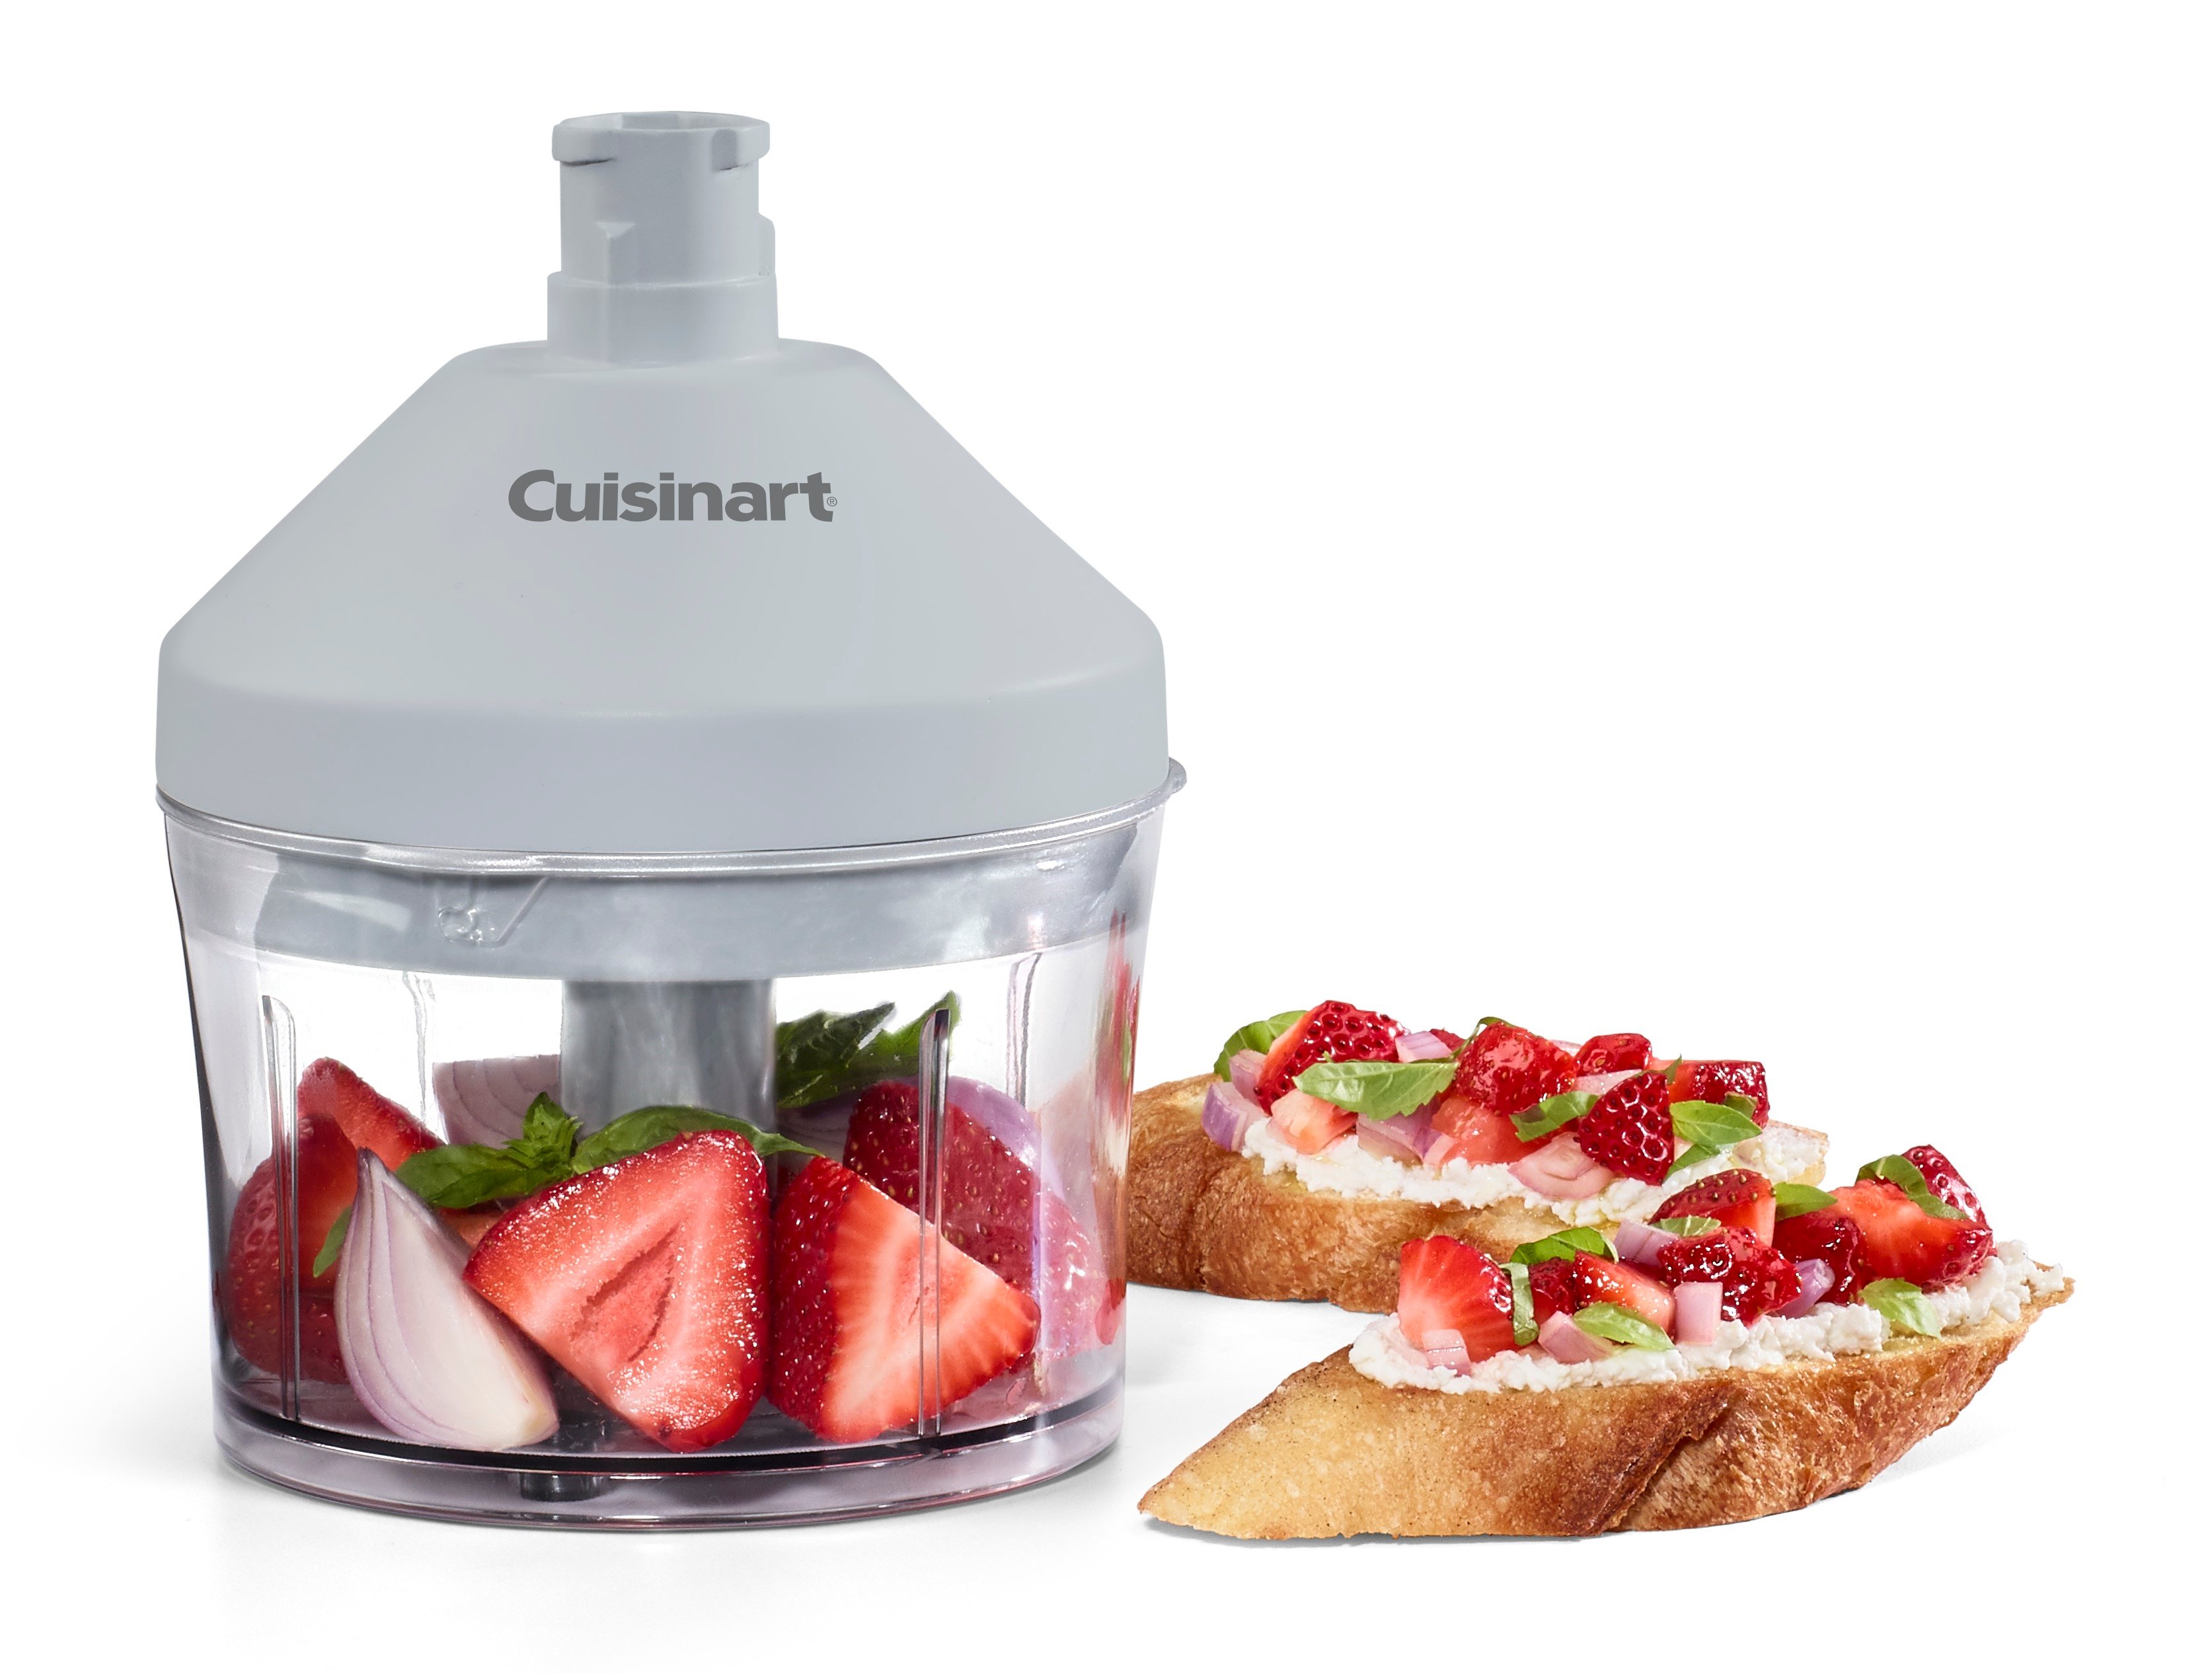 Cuisinart® Power Advantage 7-Speed Hand Mixer with Storage Case